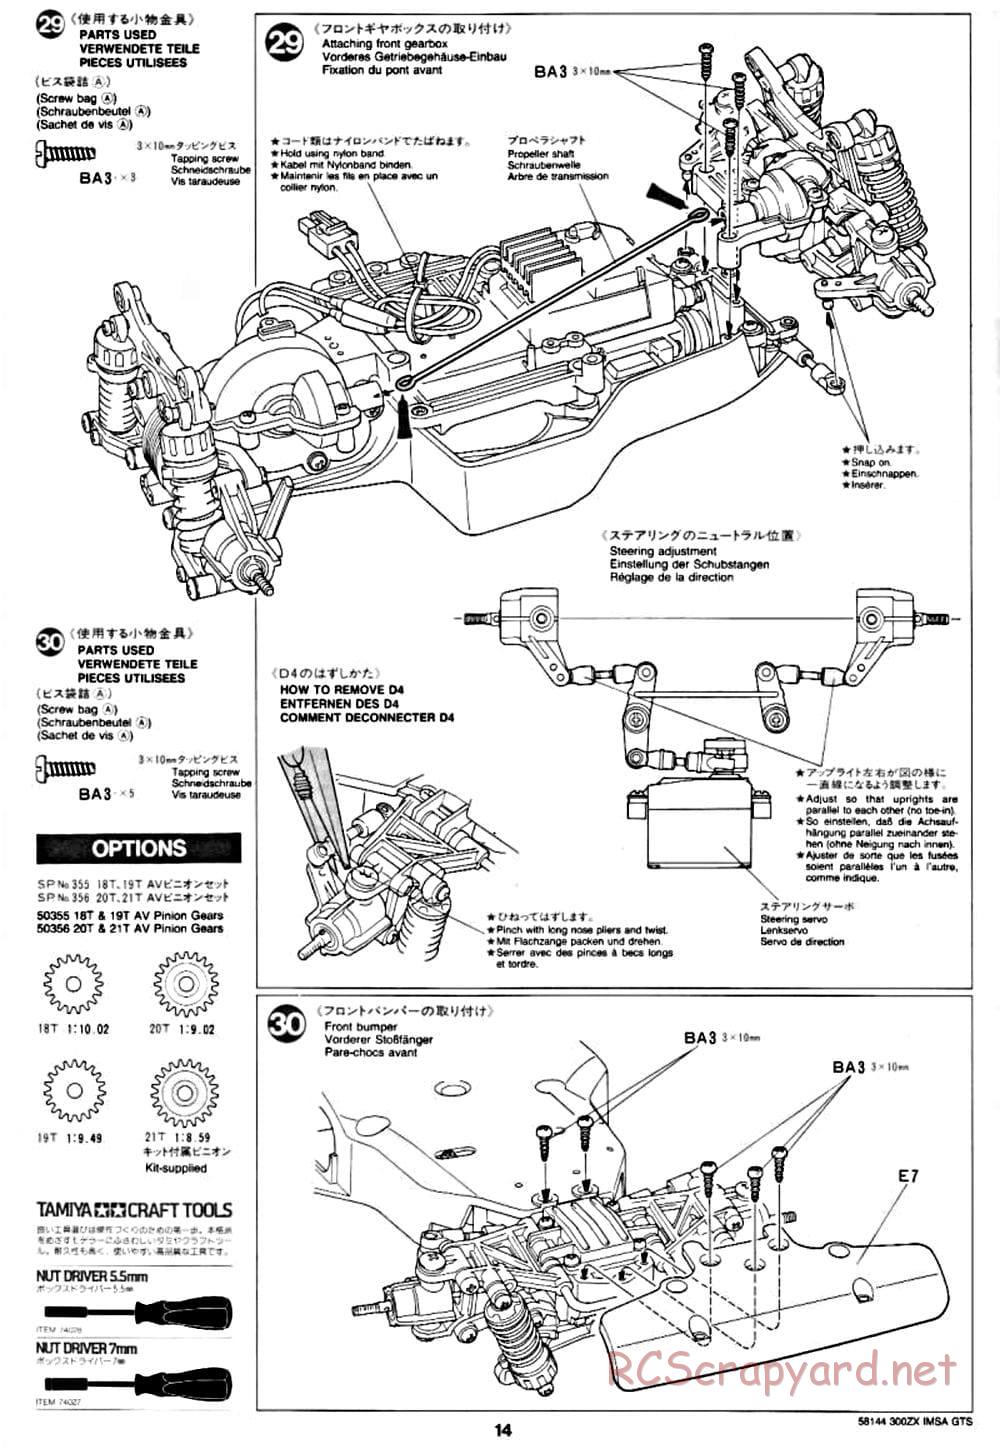 Tamiya - Nissan 300ZX IMSA-GTS - TA-02W Chassis - Manual - Page 14